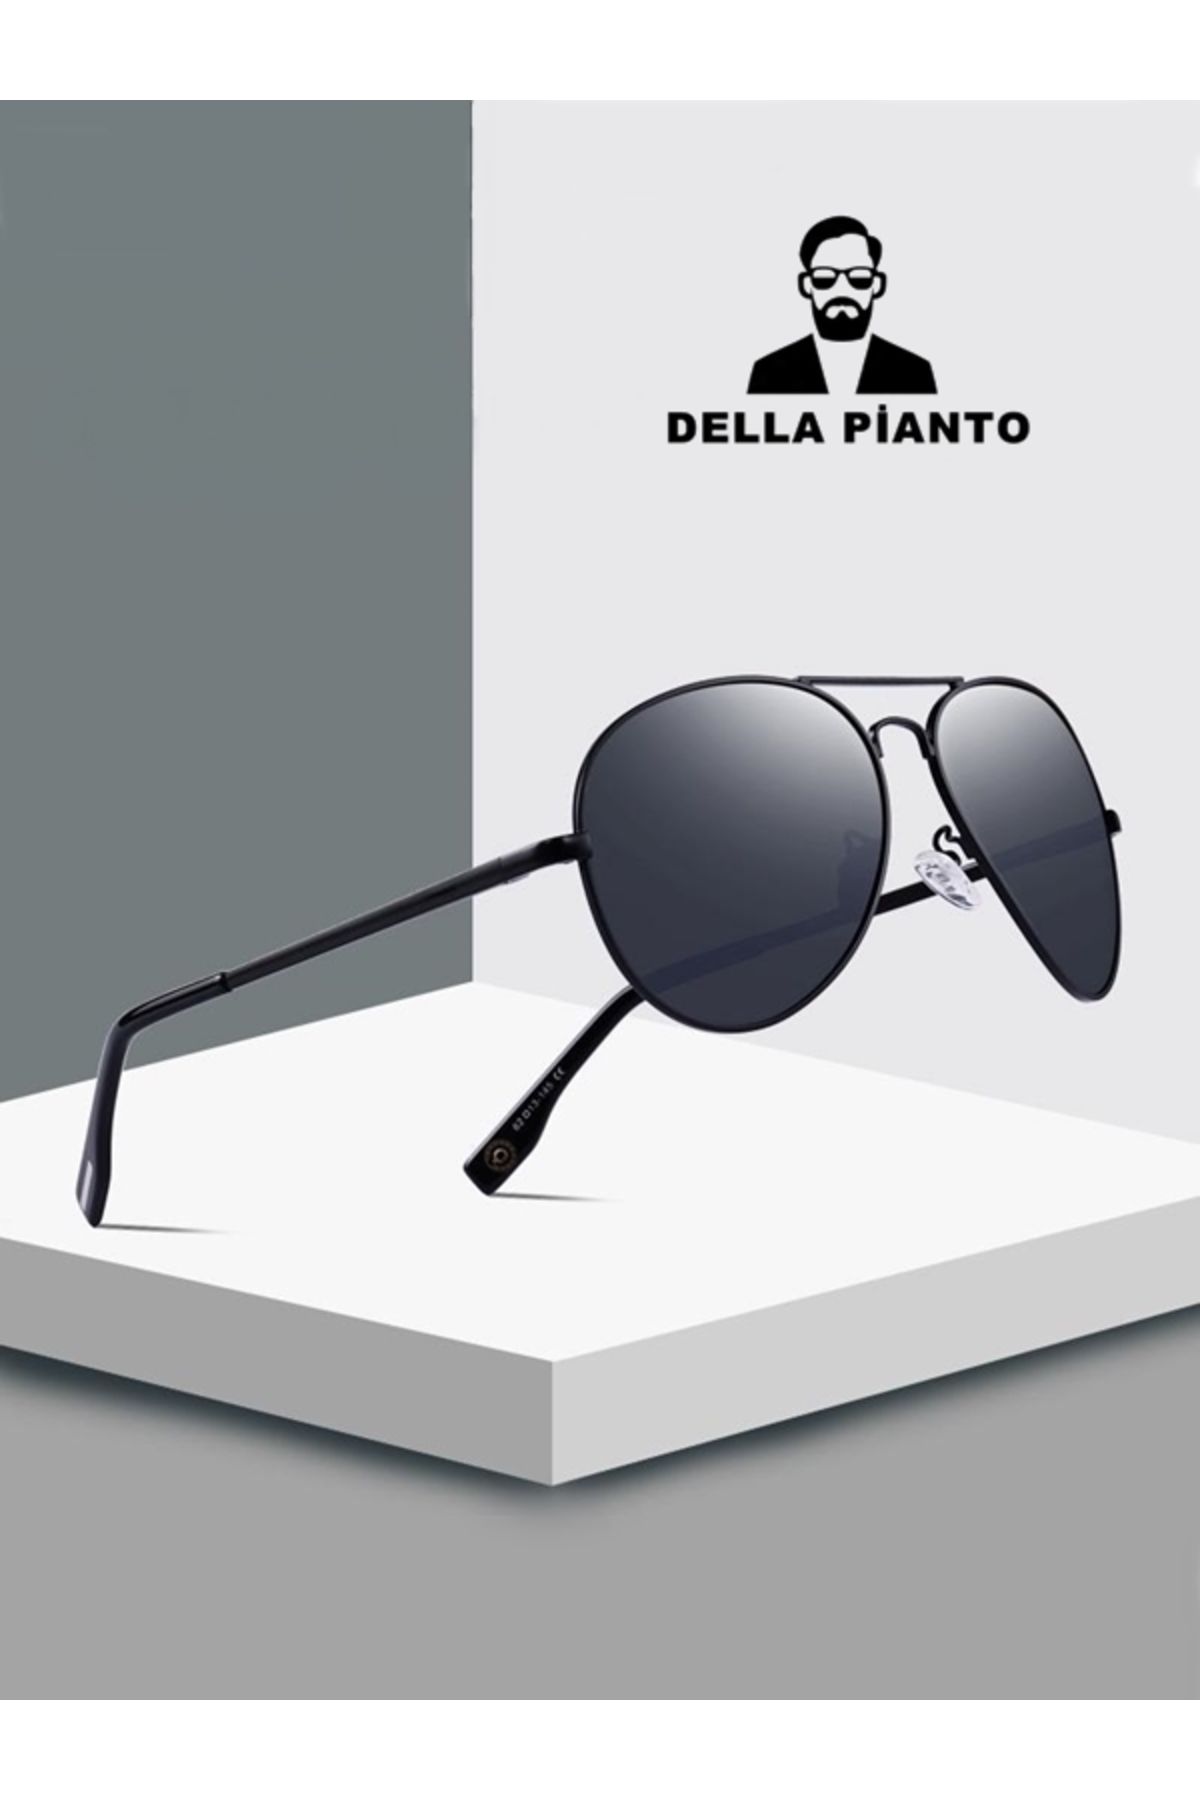 Della Pianto Unisex Organik Camlı Damla Siyah Gözlük